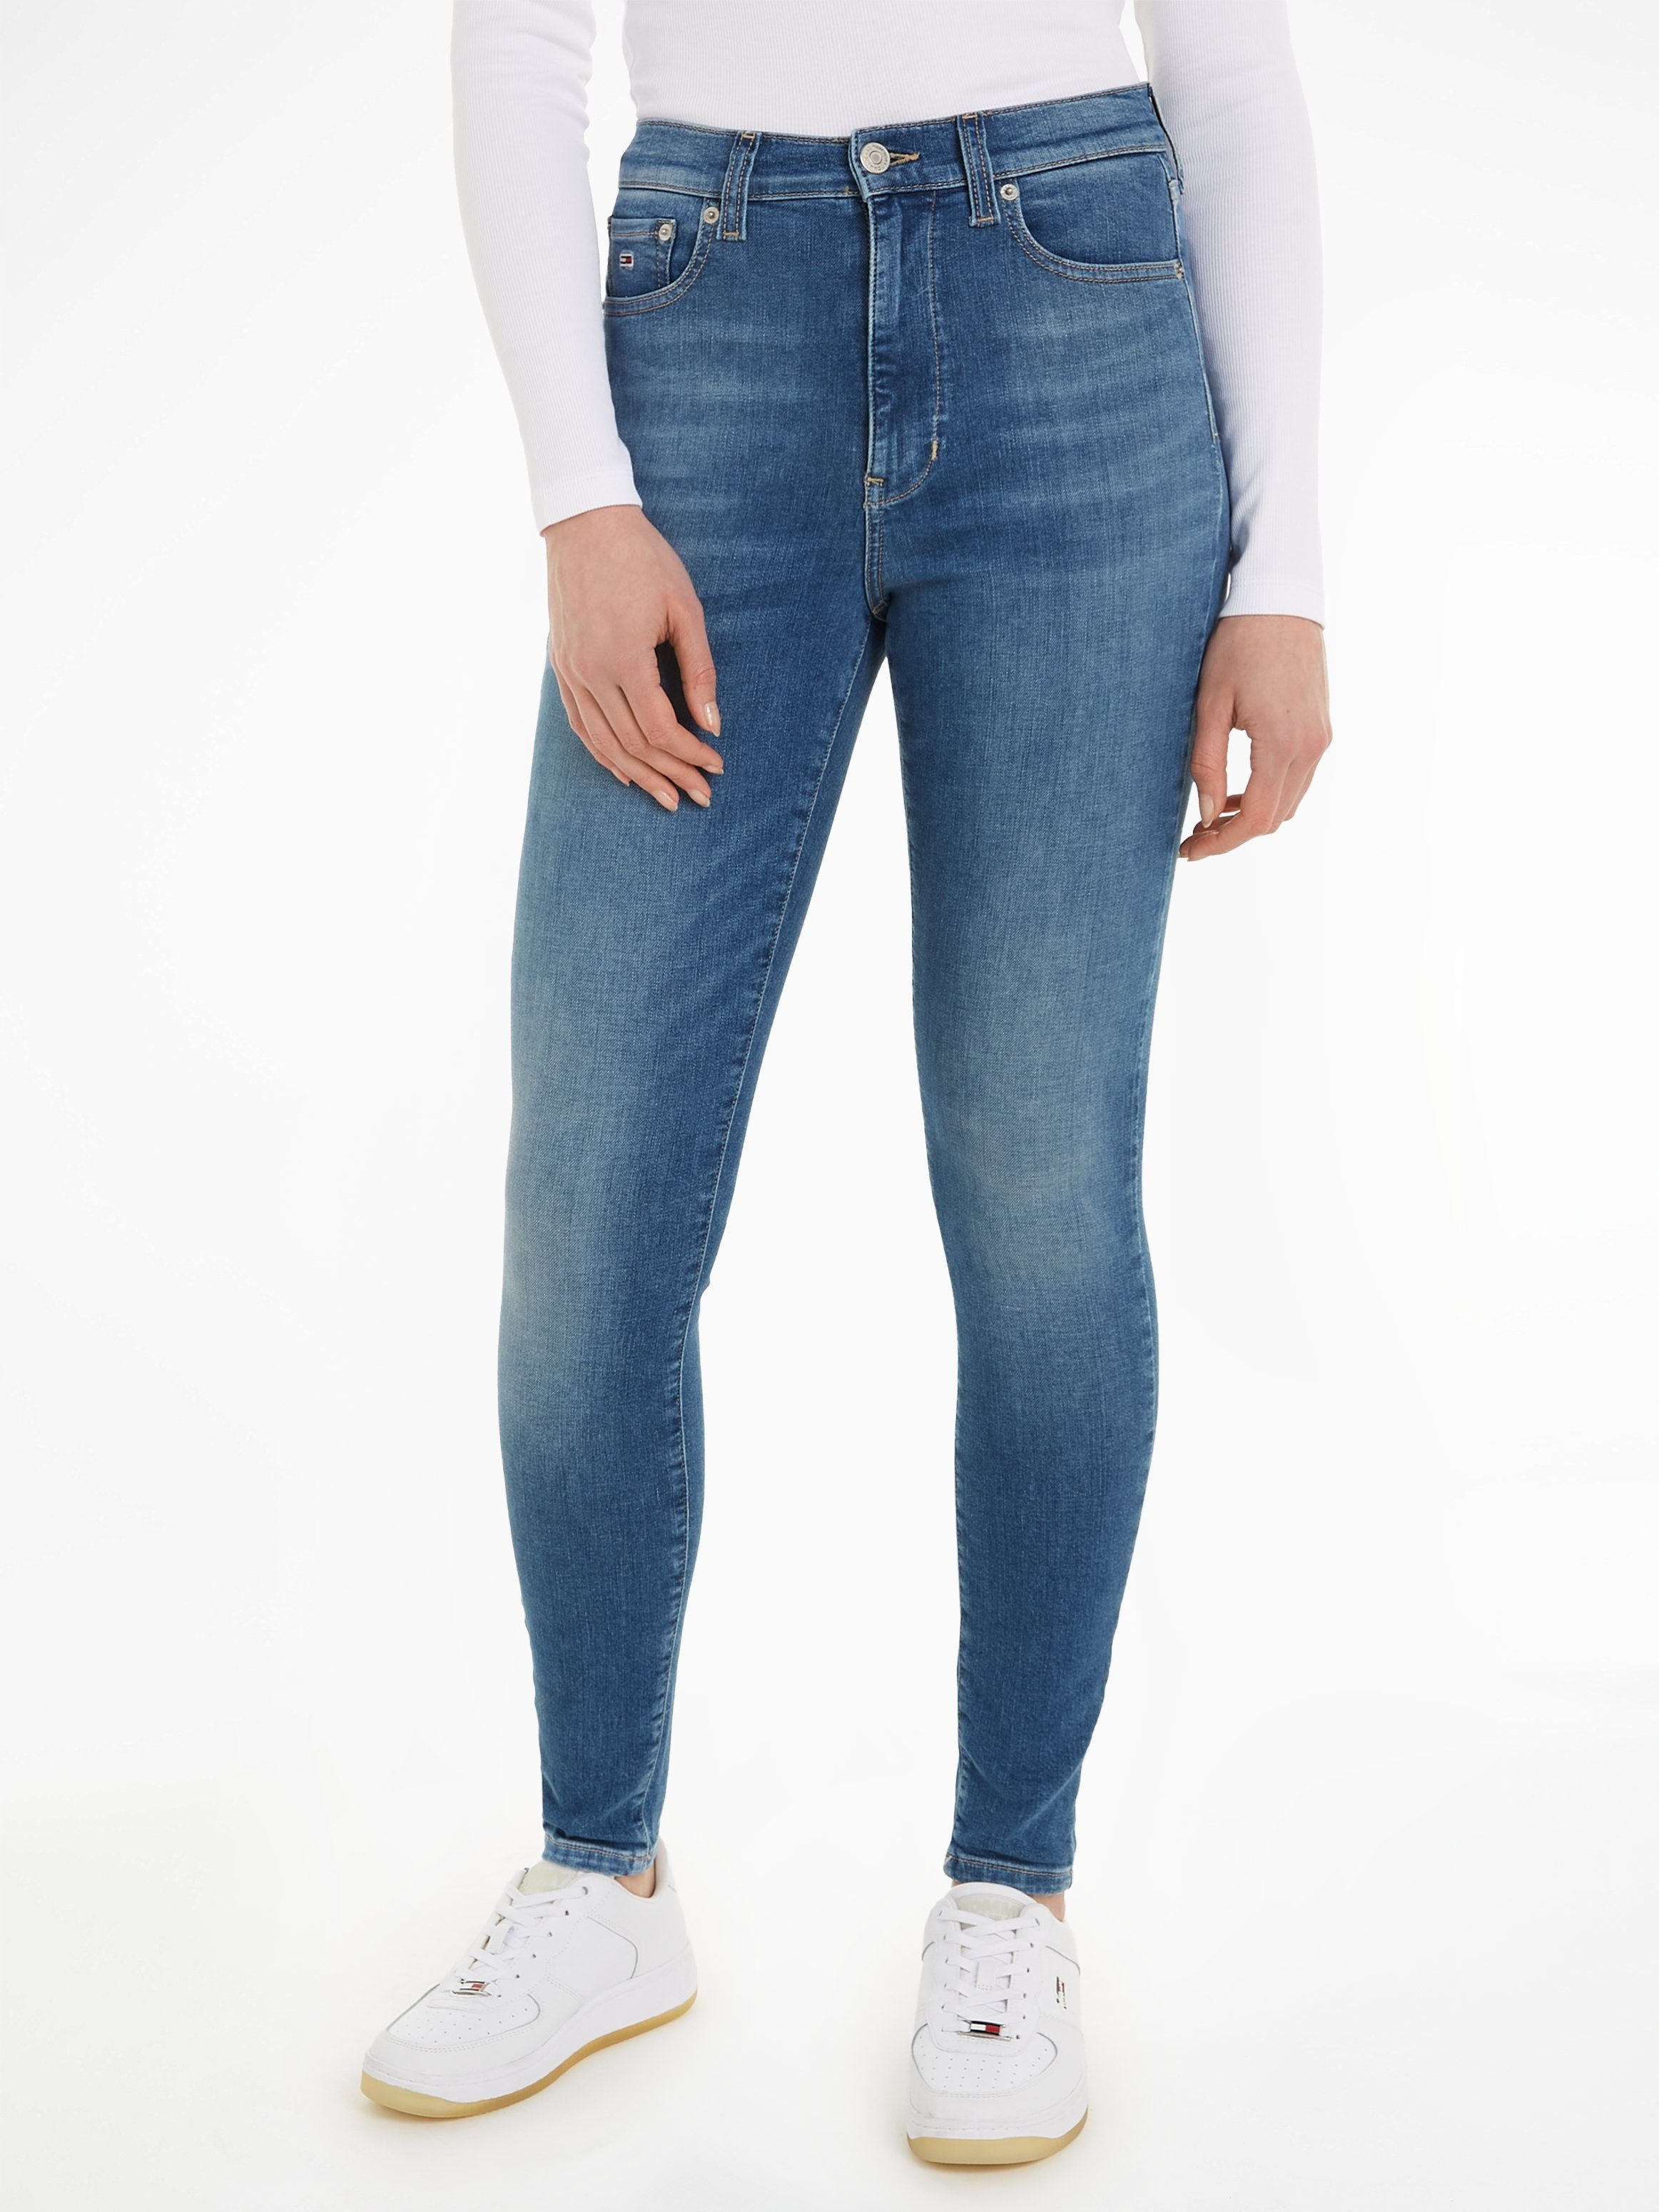 Jeans Jeans Bequeme Sylvia Ledermarkenlabel mit Denim Medium2 Tommy